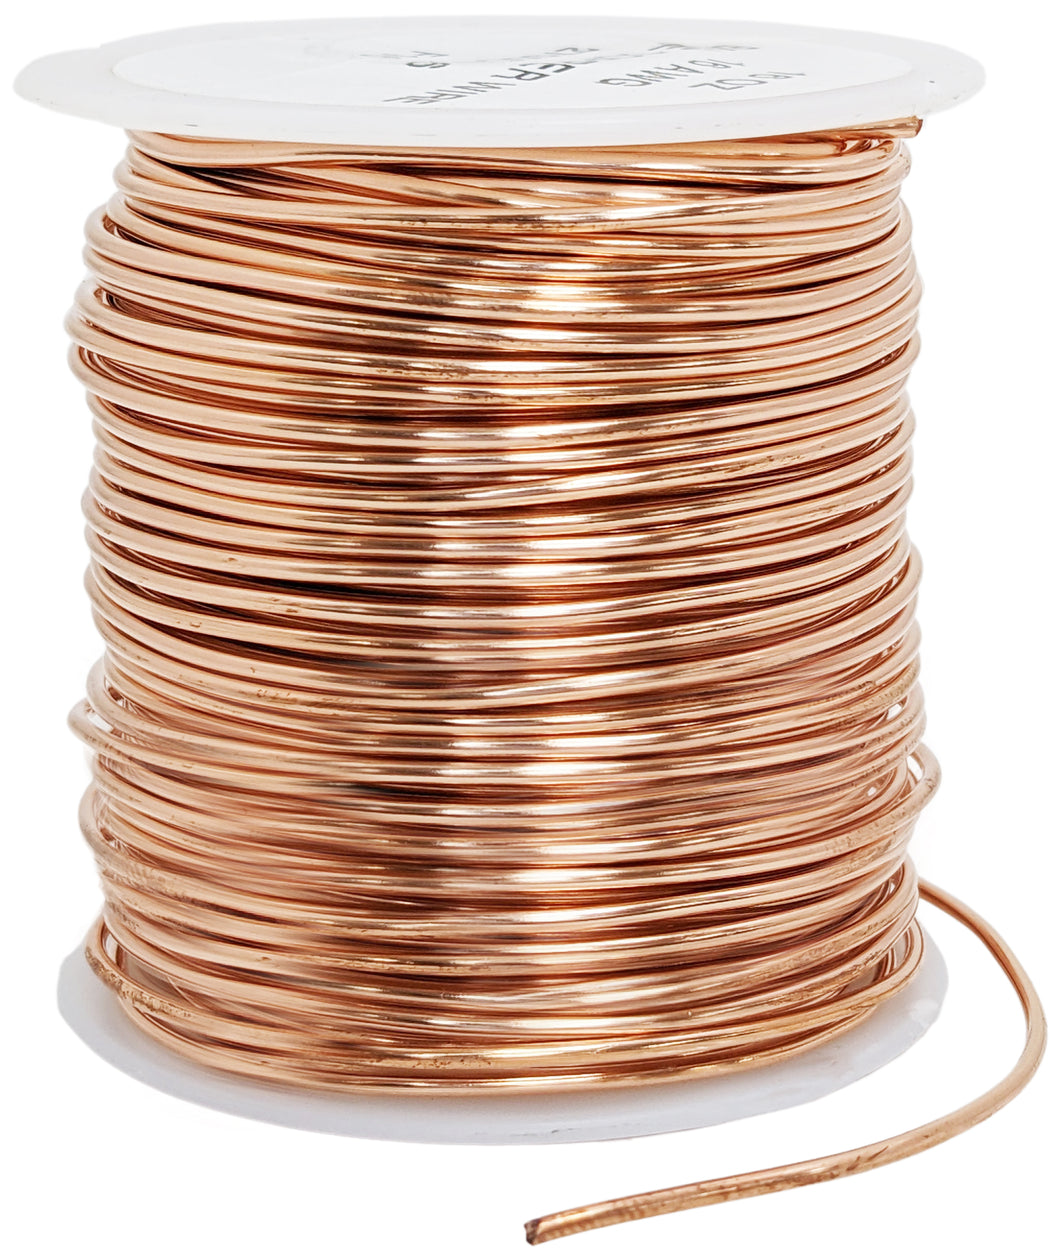 Soft Bare Copper Wire, 16 Gauge, 126 Feet, 1 Pound Spool